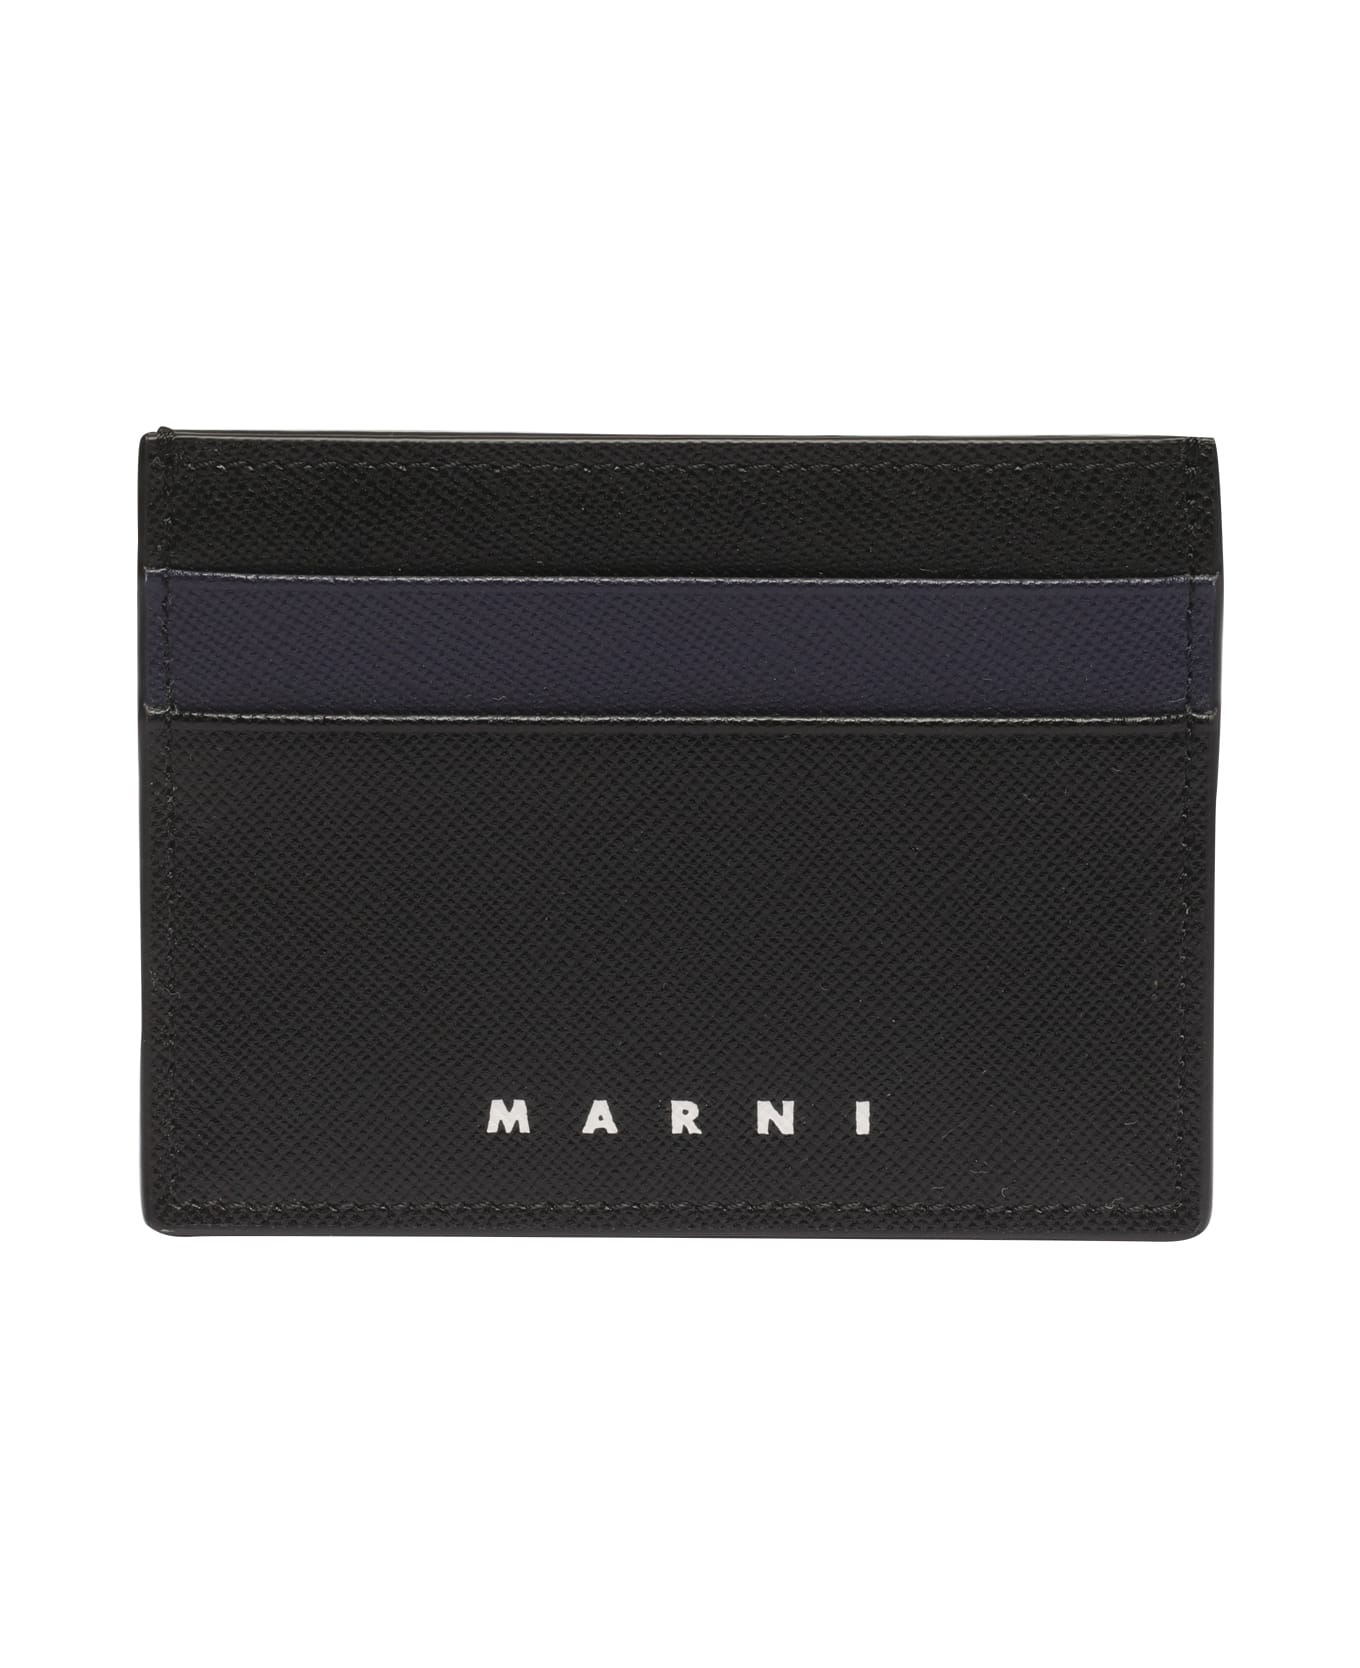 Marni Logo Cardholder - Nero 財布